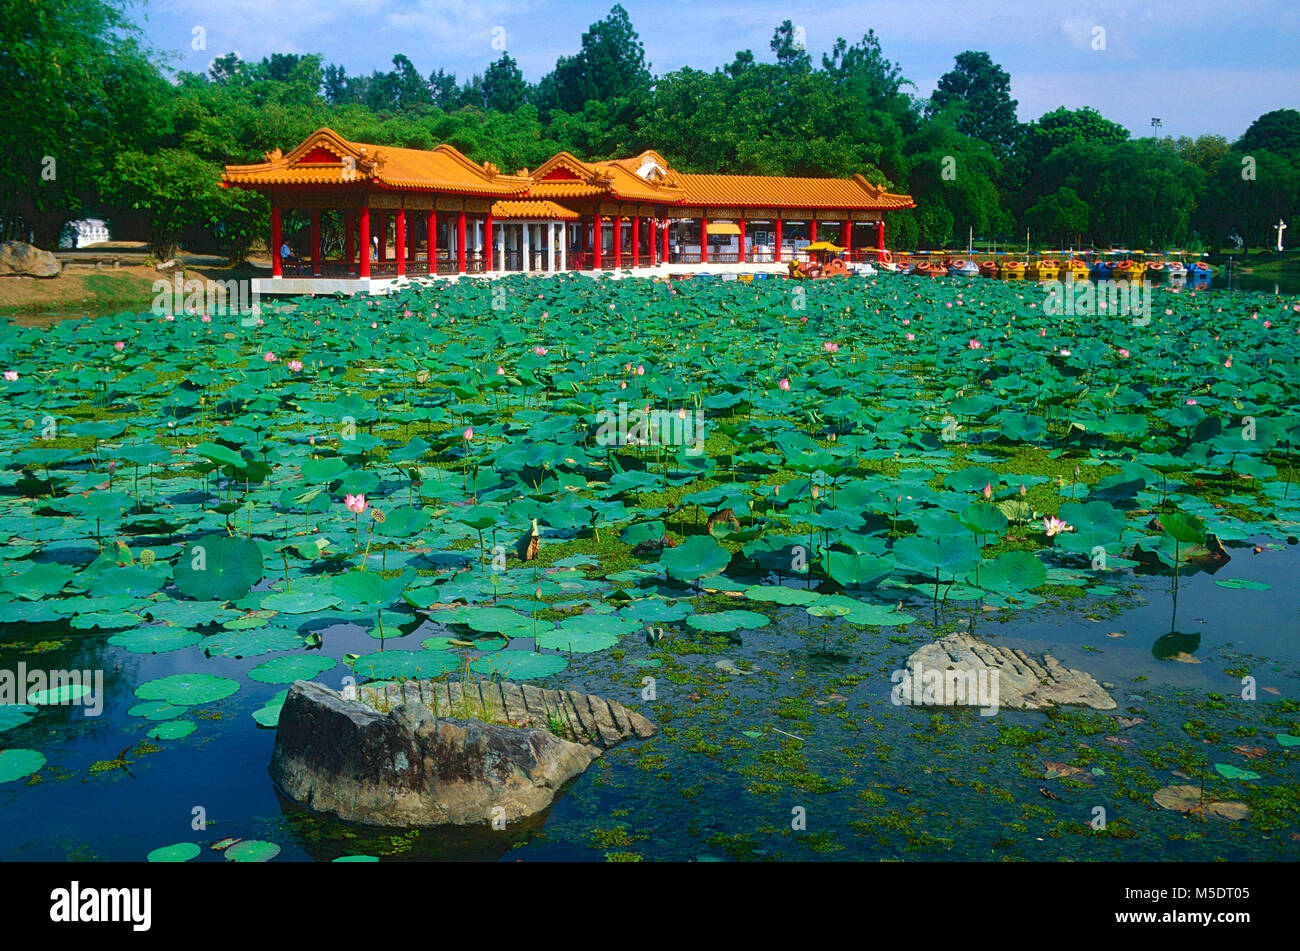 Chinese garden, temple, pond, Indian Lotus, blooming, Nelumbo nucifera, Nelumbonaceae, flower, water plant, plant, Singapore Stock Photo